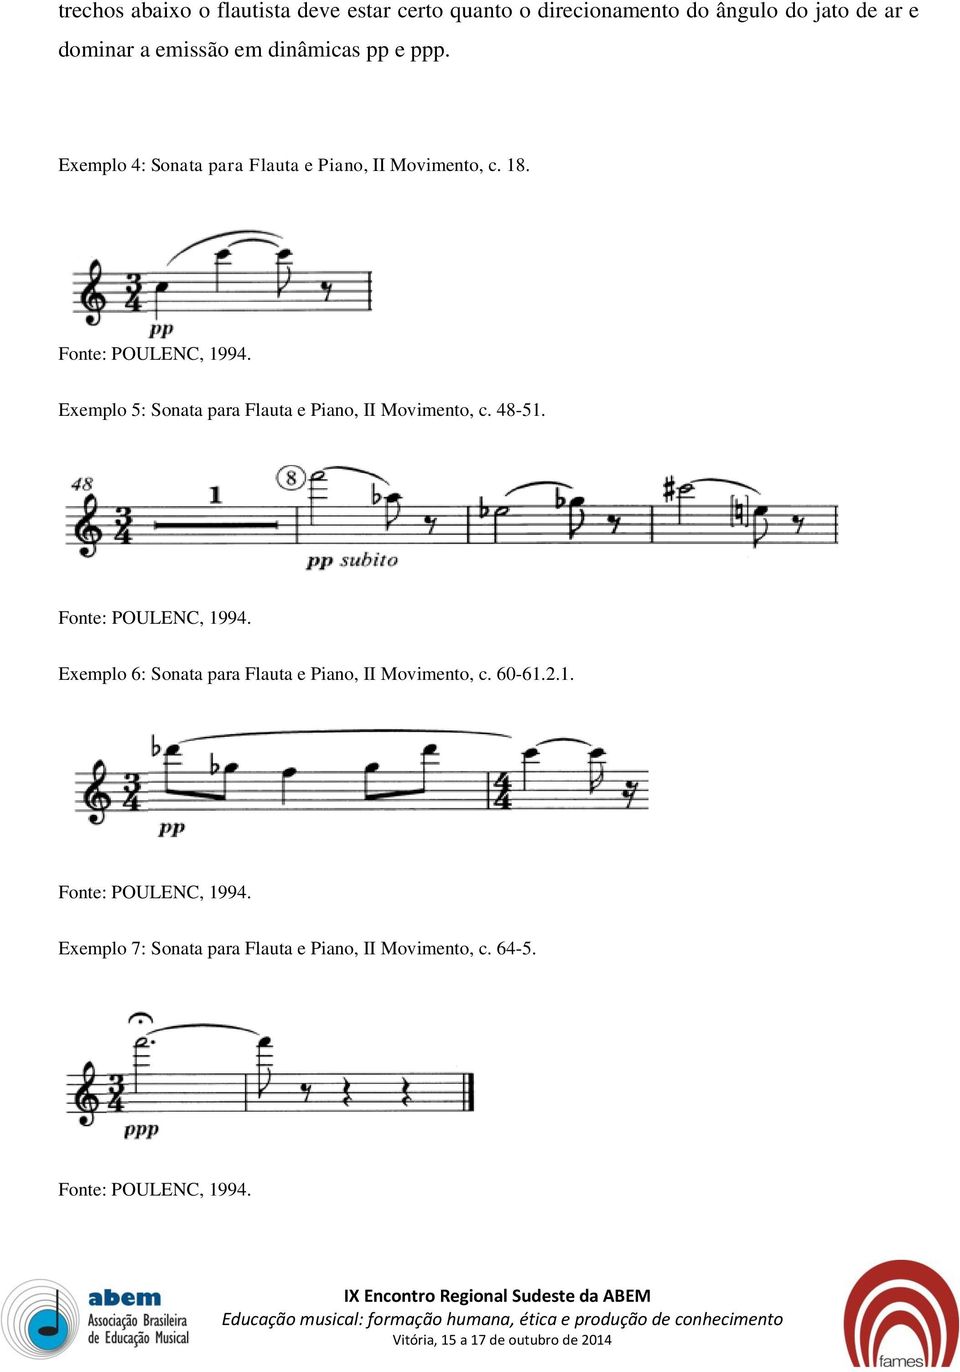 18. Exemplo 5: Sonata para Flauta e Piano, II Movimento, c. 48-51.